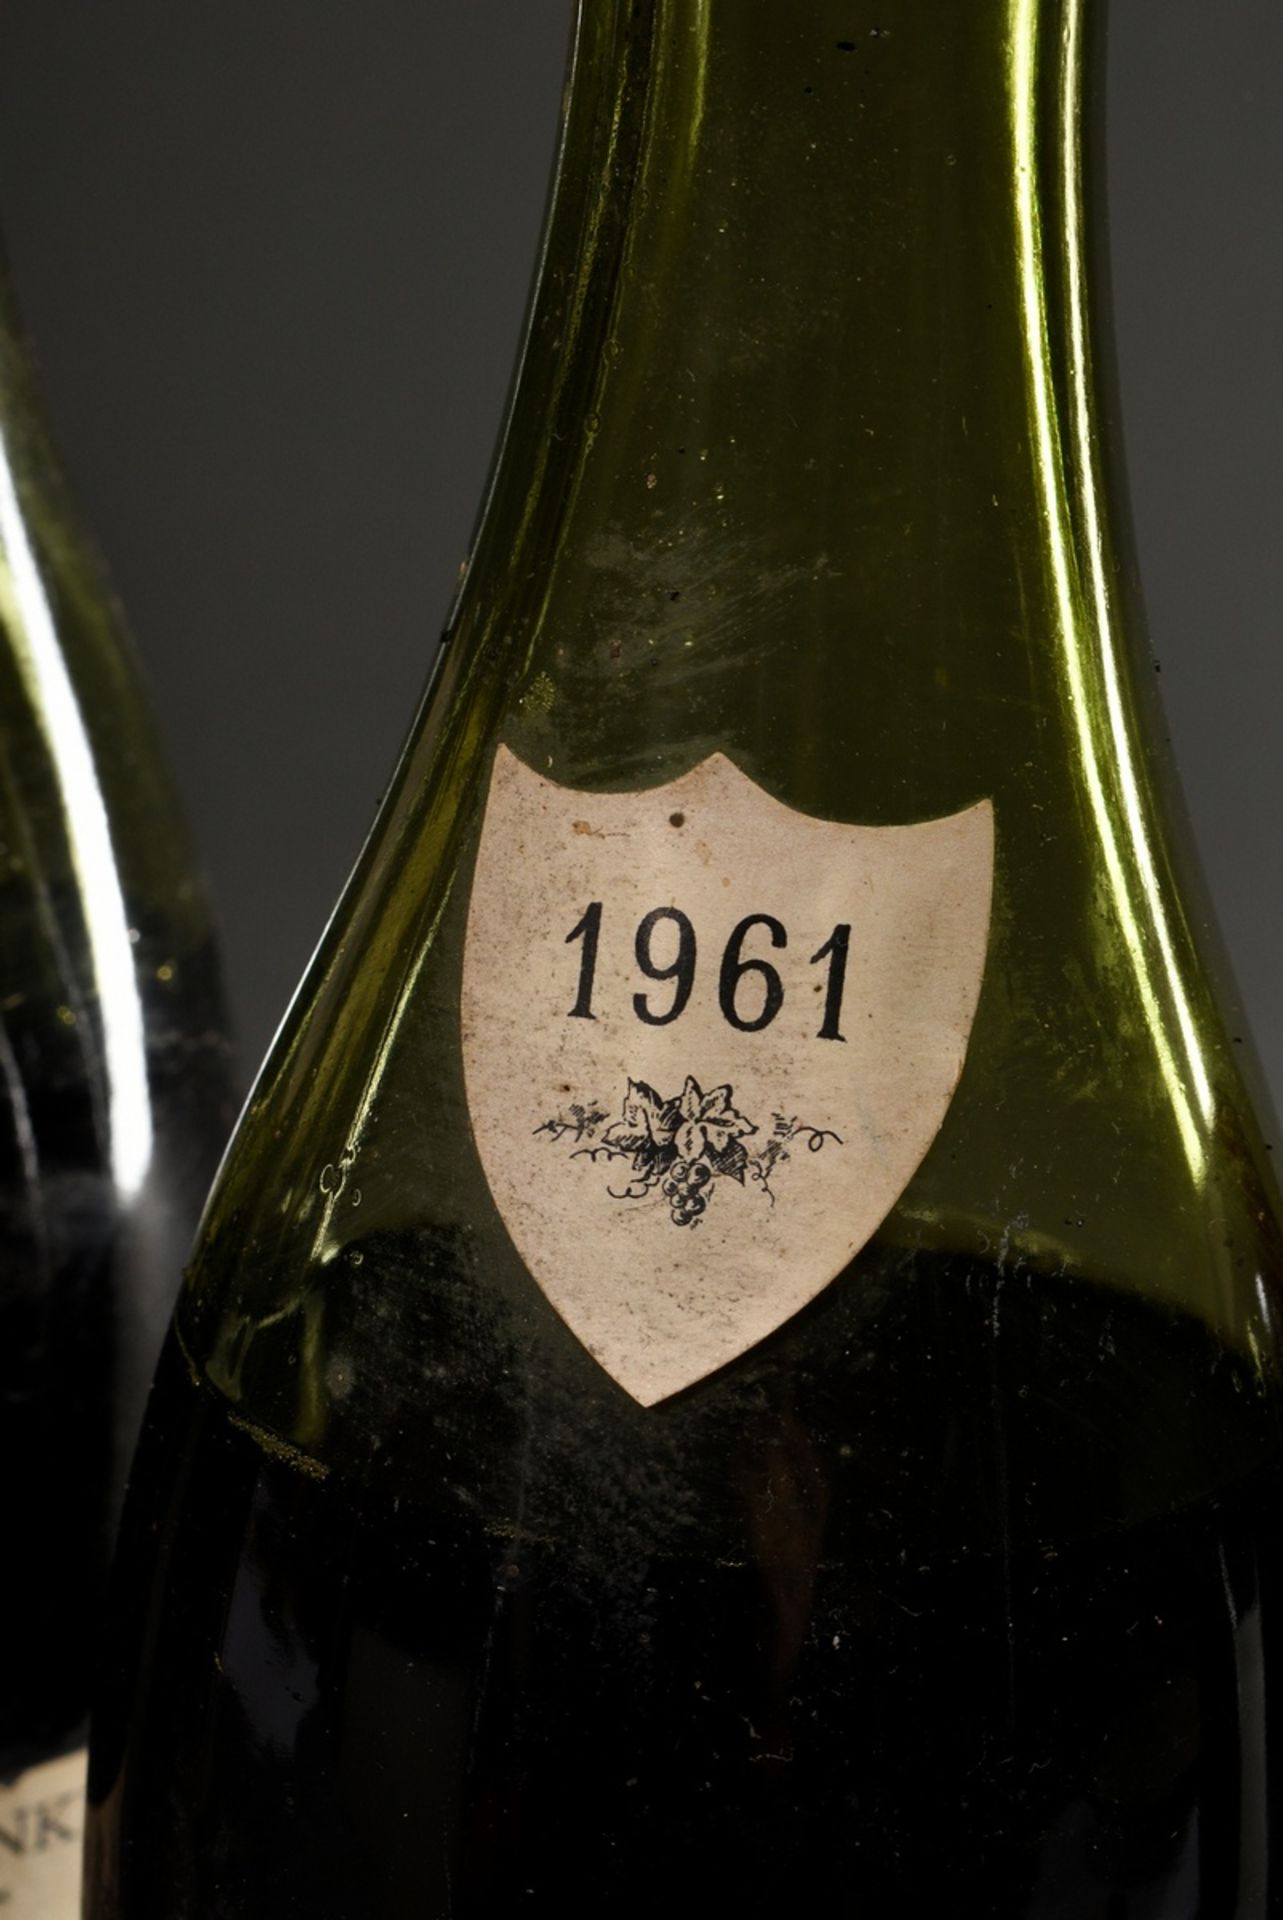 6 Flaschen 1961 Vins fins de la Cote de Nuits, Maison Thomas Bassot, Gevrey-Chambertin, Rotwein, Bu - Bild 3 aus 5